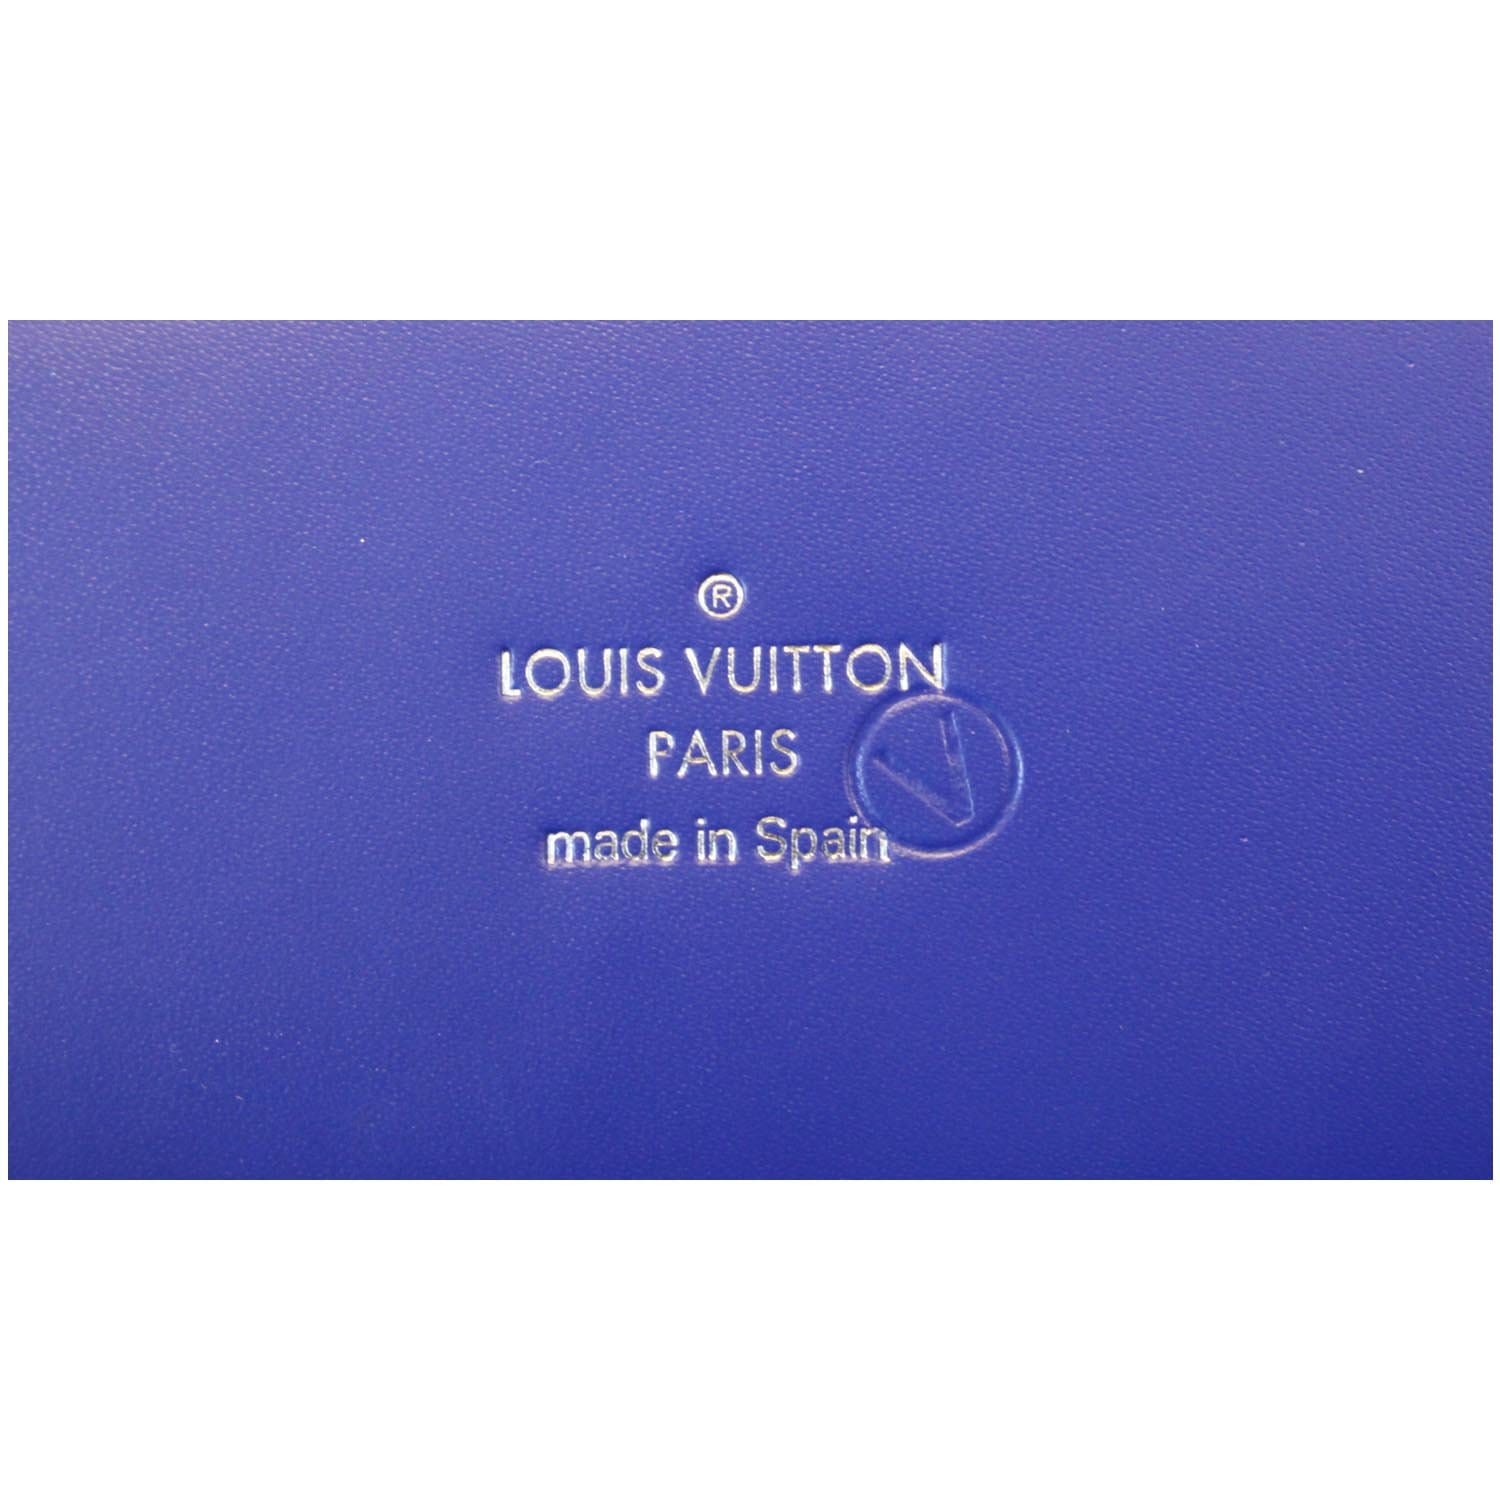 Louis Vuitton Phenix Shoulder Tote in Blue Jean Denim Blue Epi